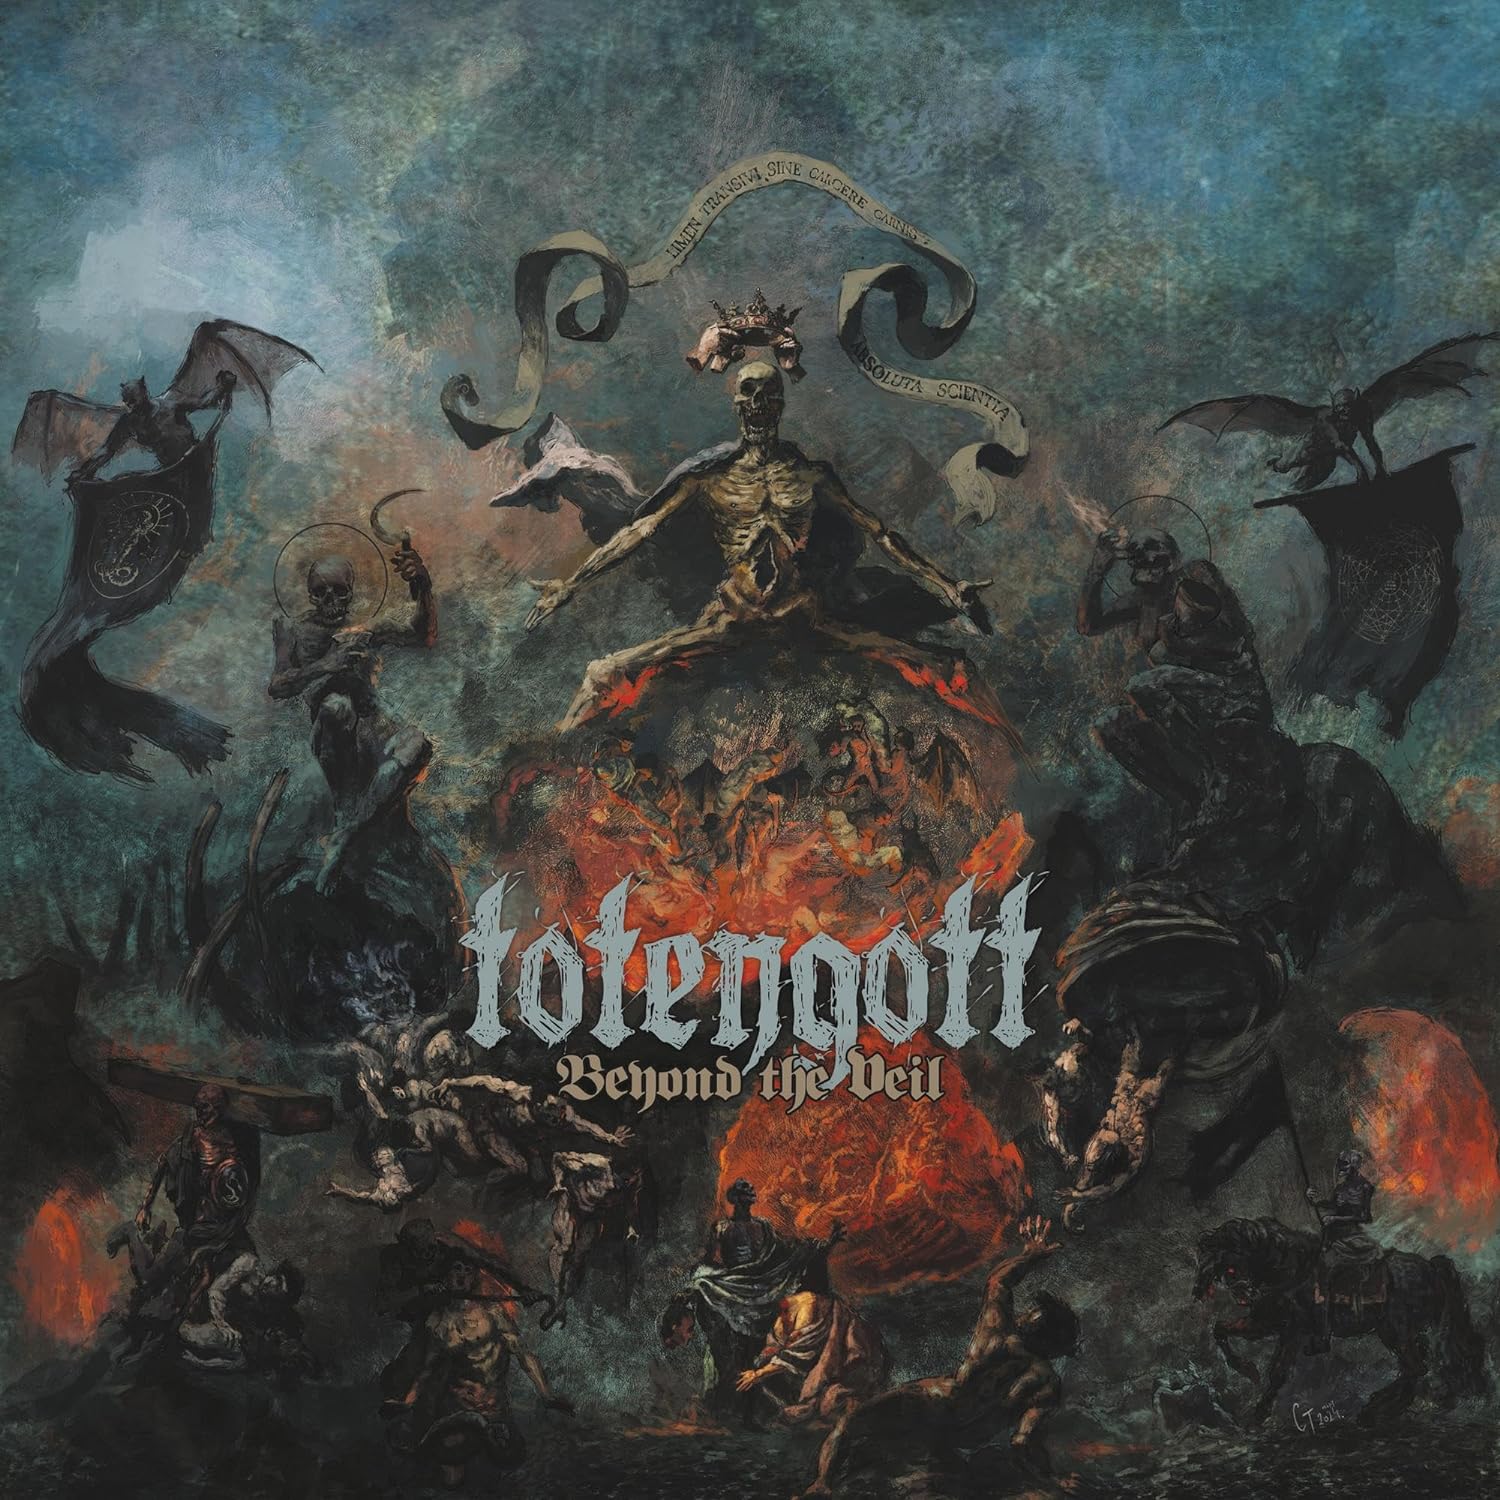 Totengott "Beyond The Veil" Vinyl - PRE-ORDER